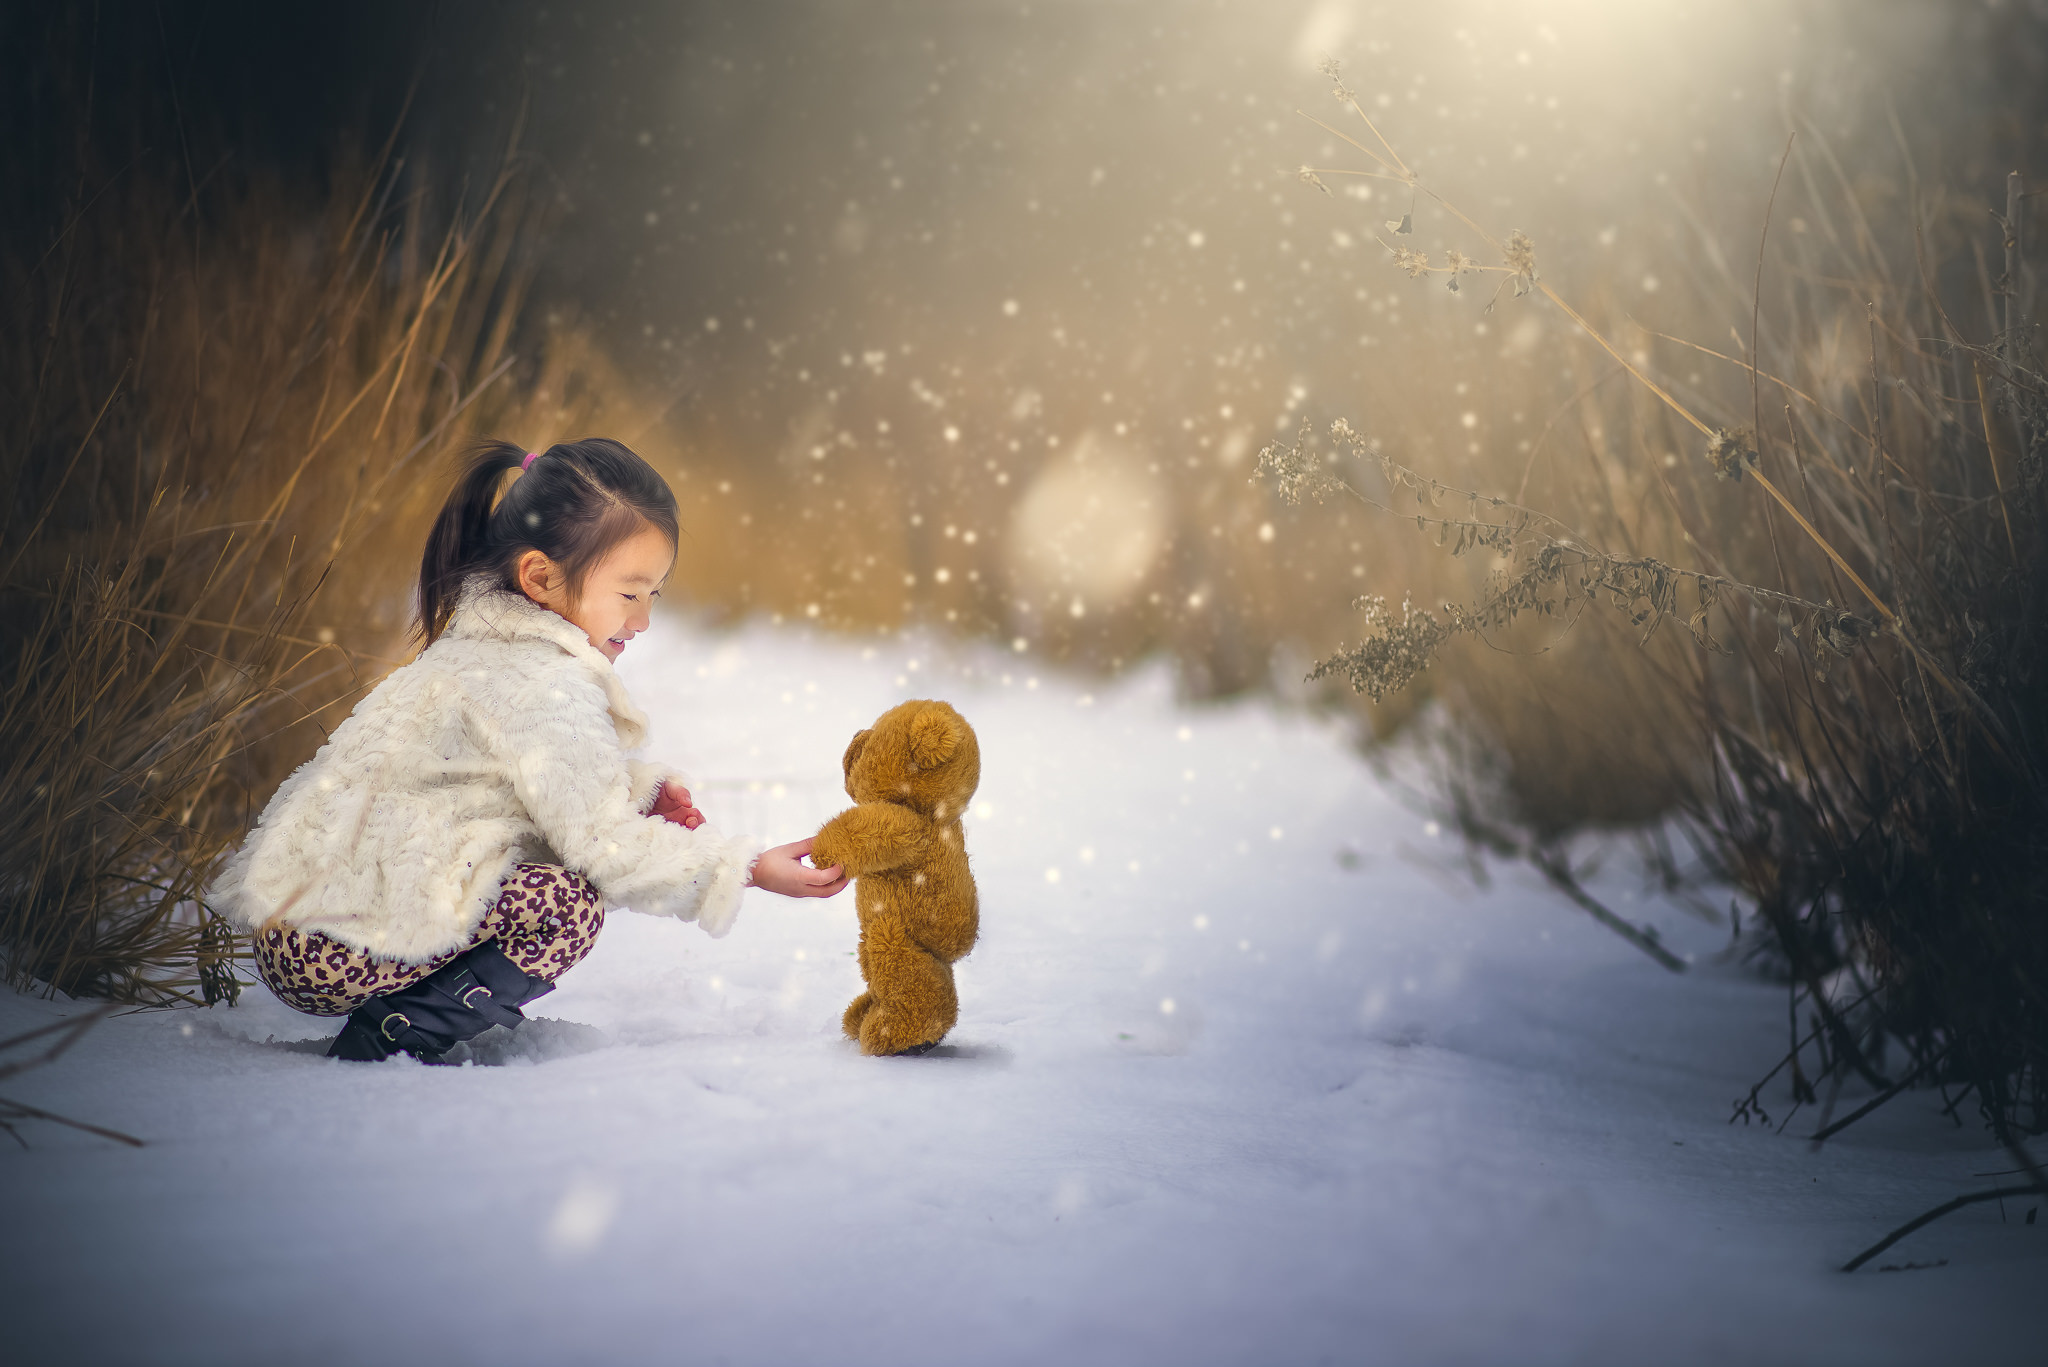 Image: Girl, toy, bear, snow, winter, grass